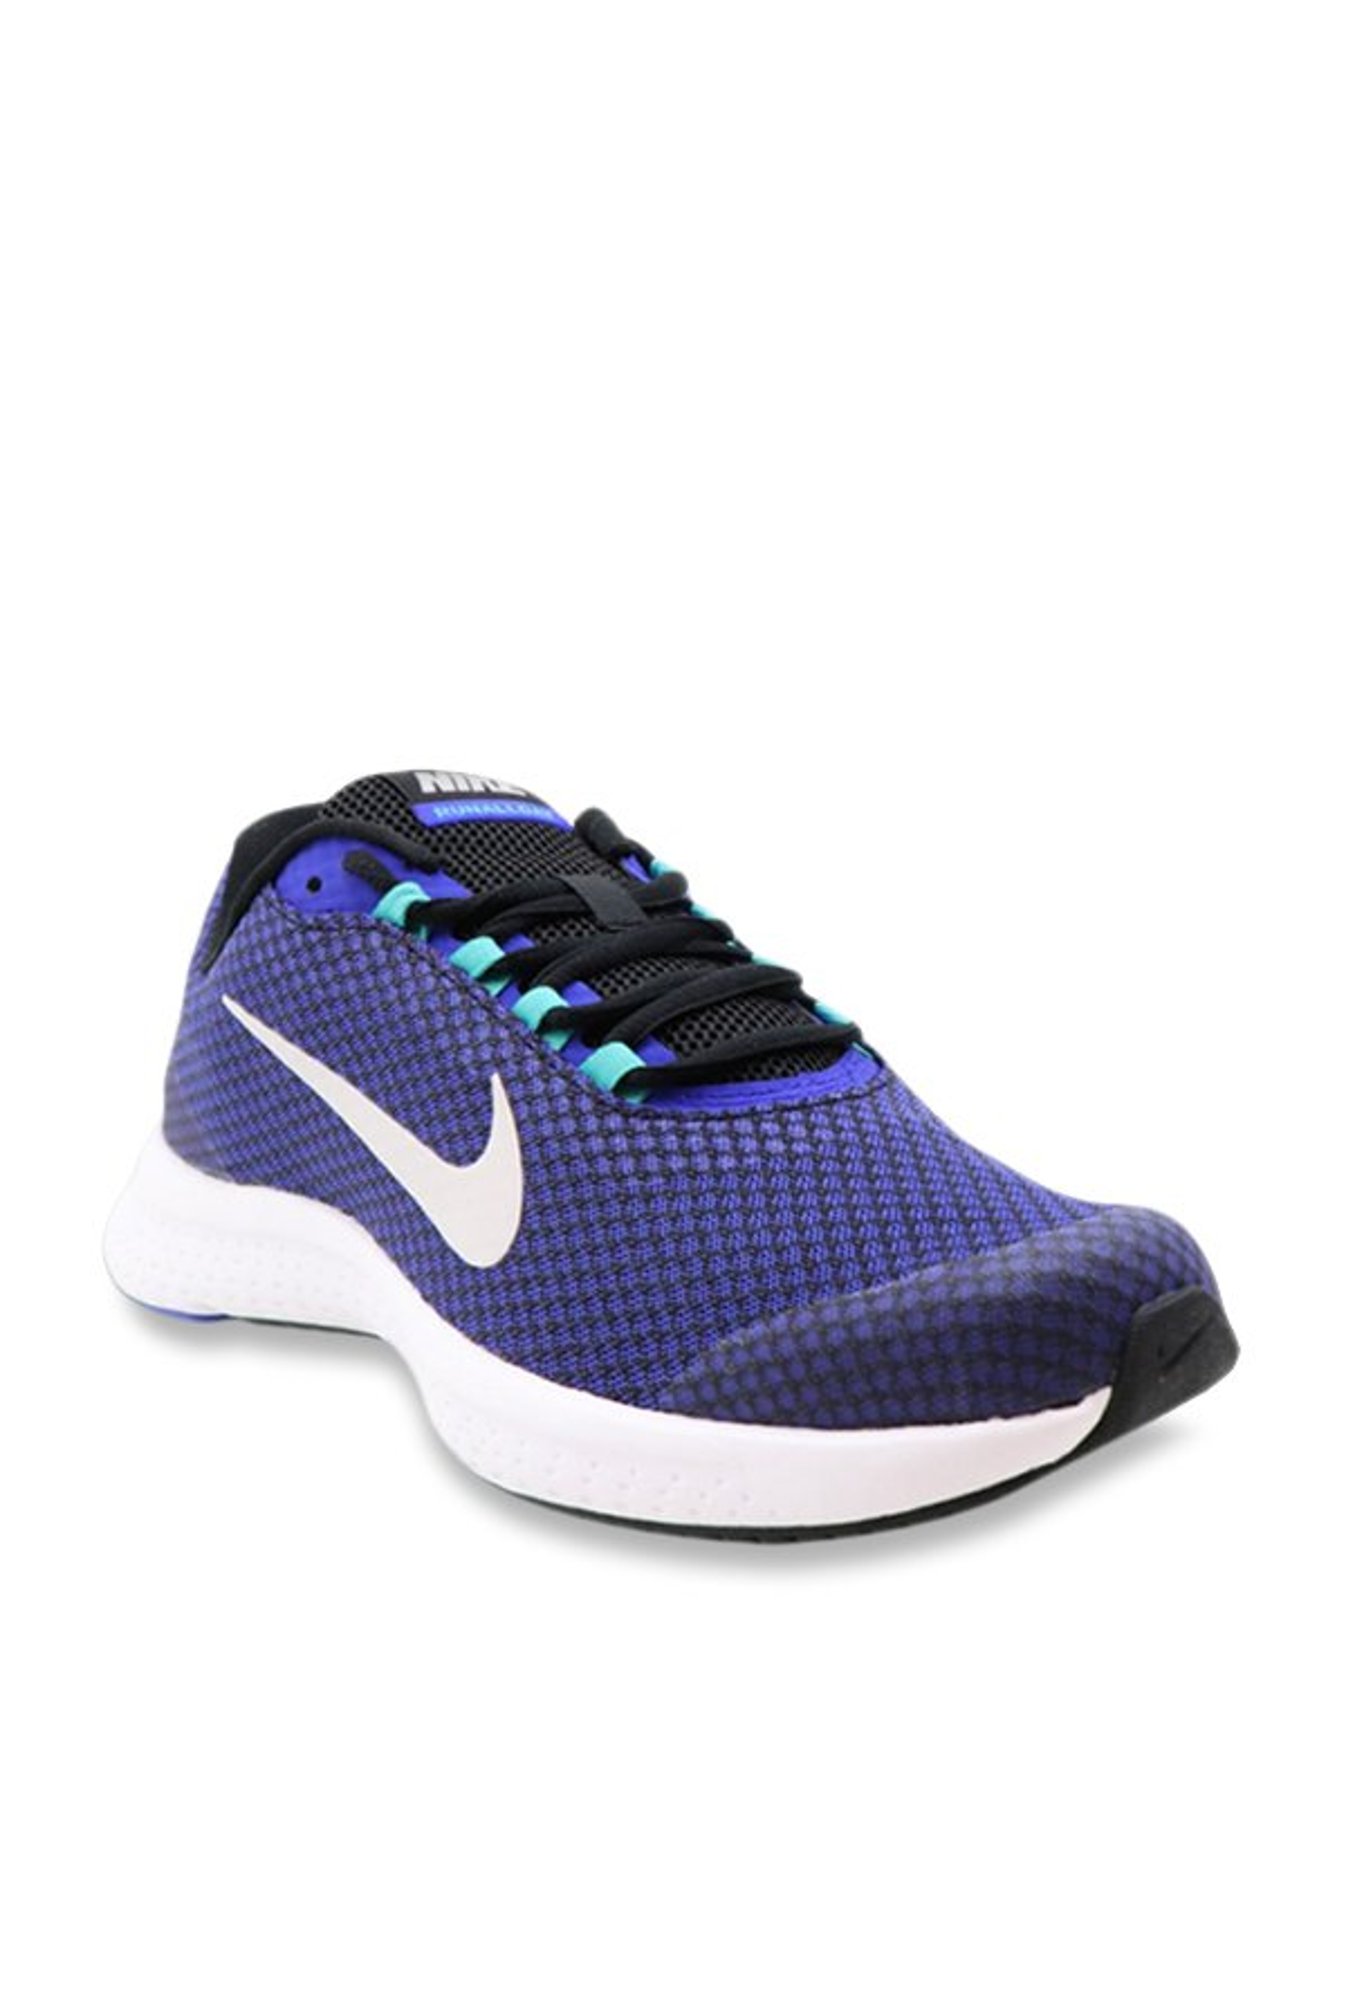 Nike Runallday Purple Running Shoes 